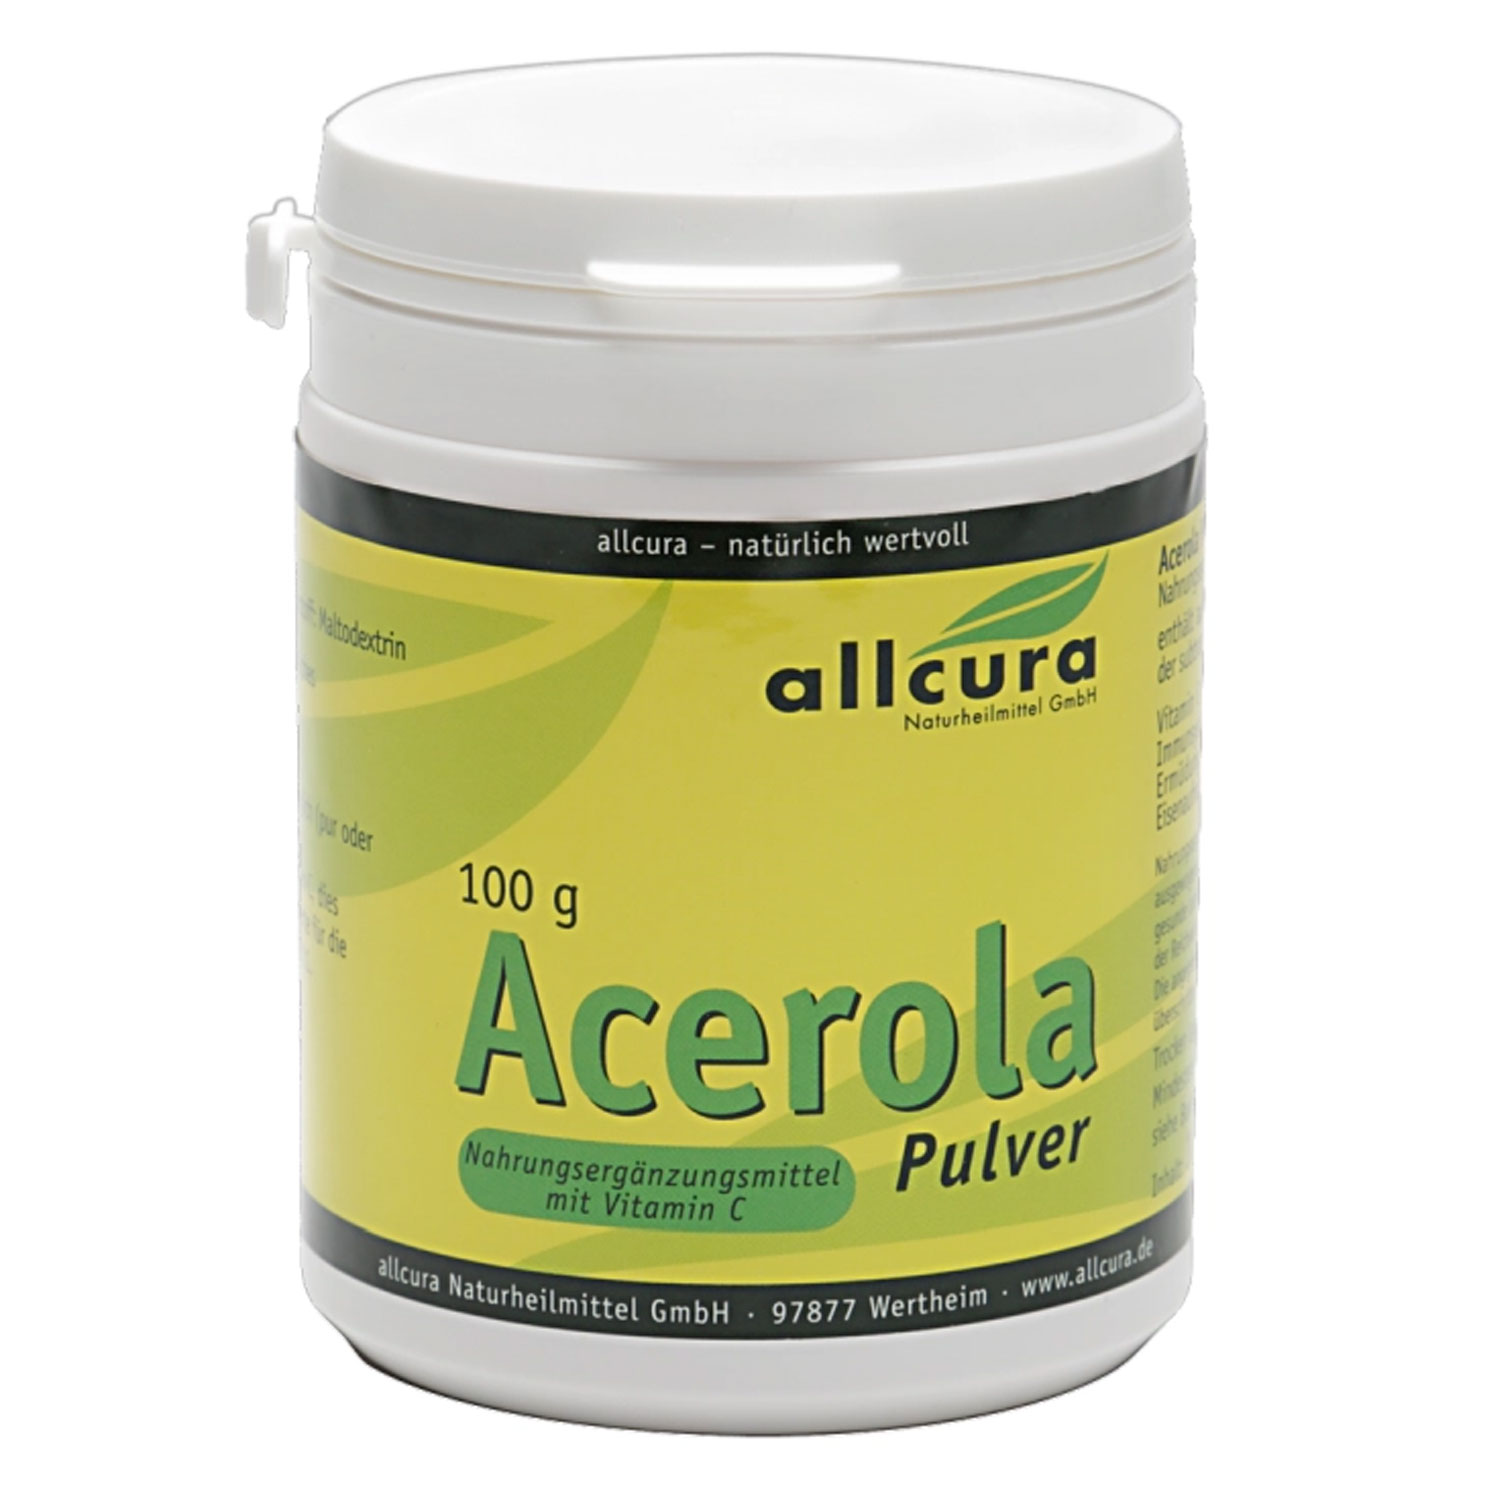 Acerola Pulver von Allcura - 100g